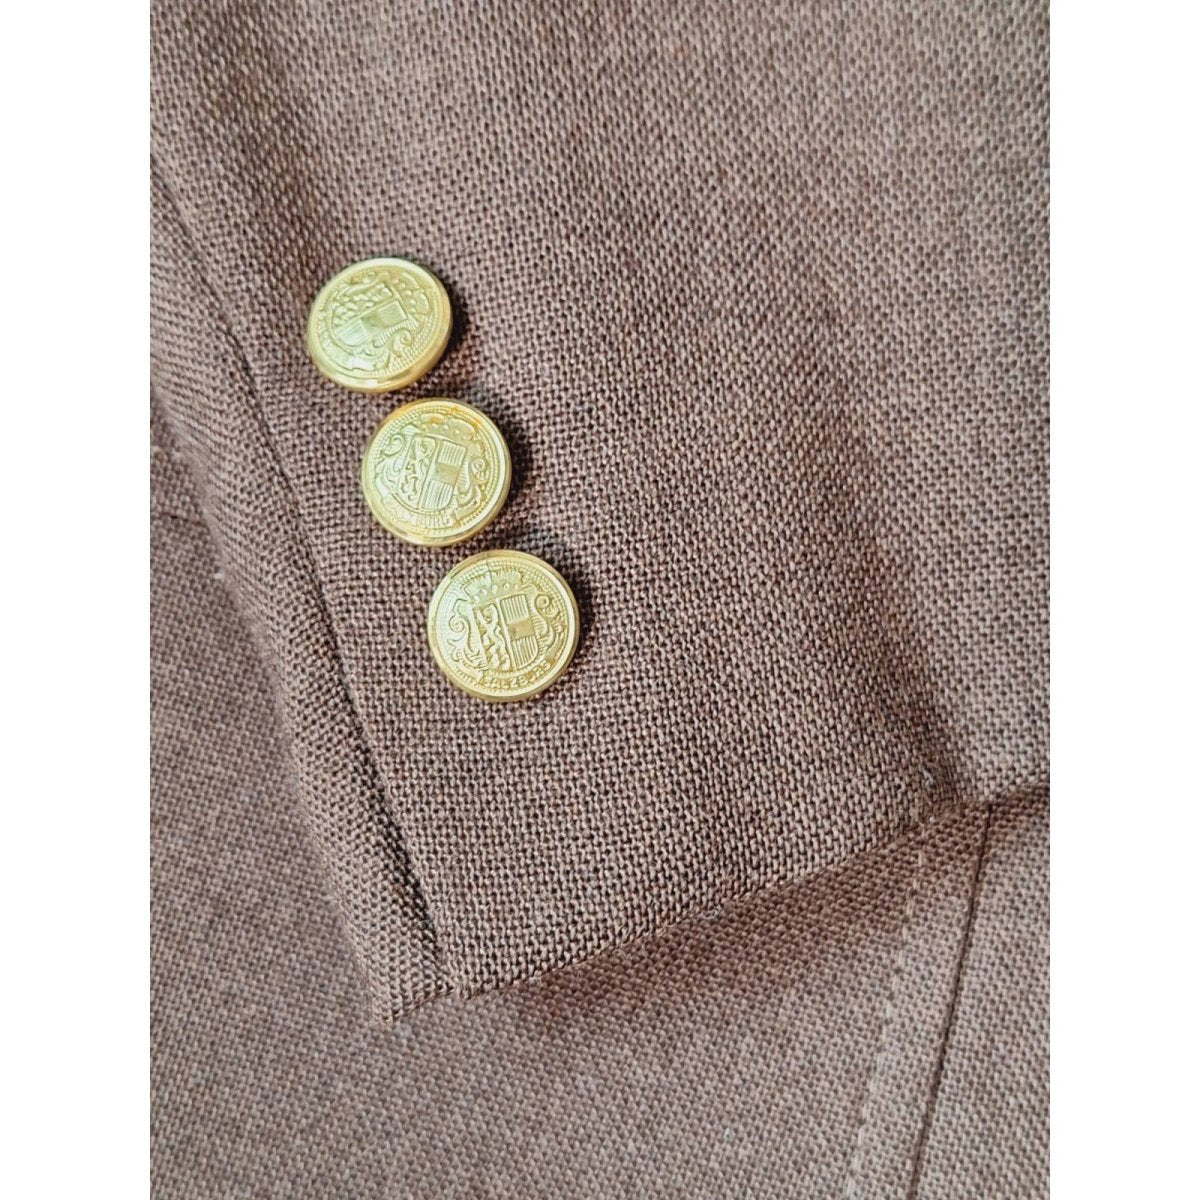 Vintage 70s Brown Gold Button Sport Jacket Blazer Men's Size 40-42 Short - themallvintage The Mall Vintage